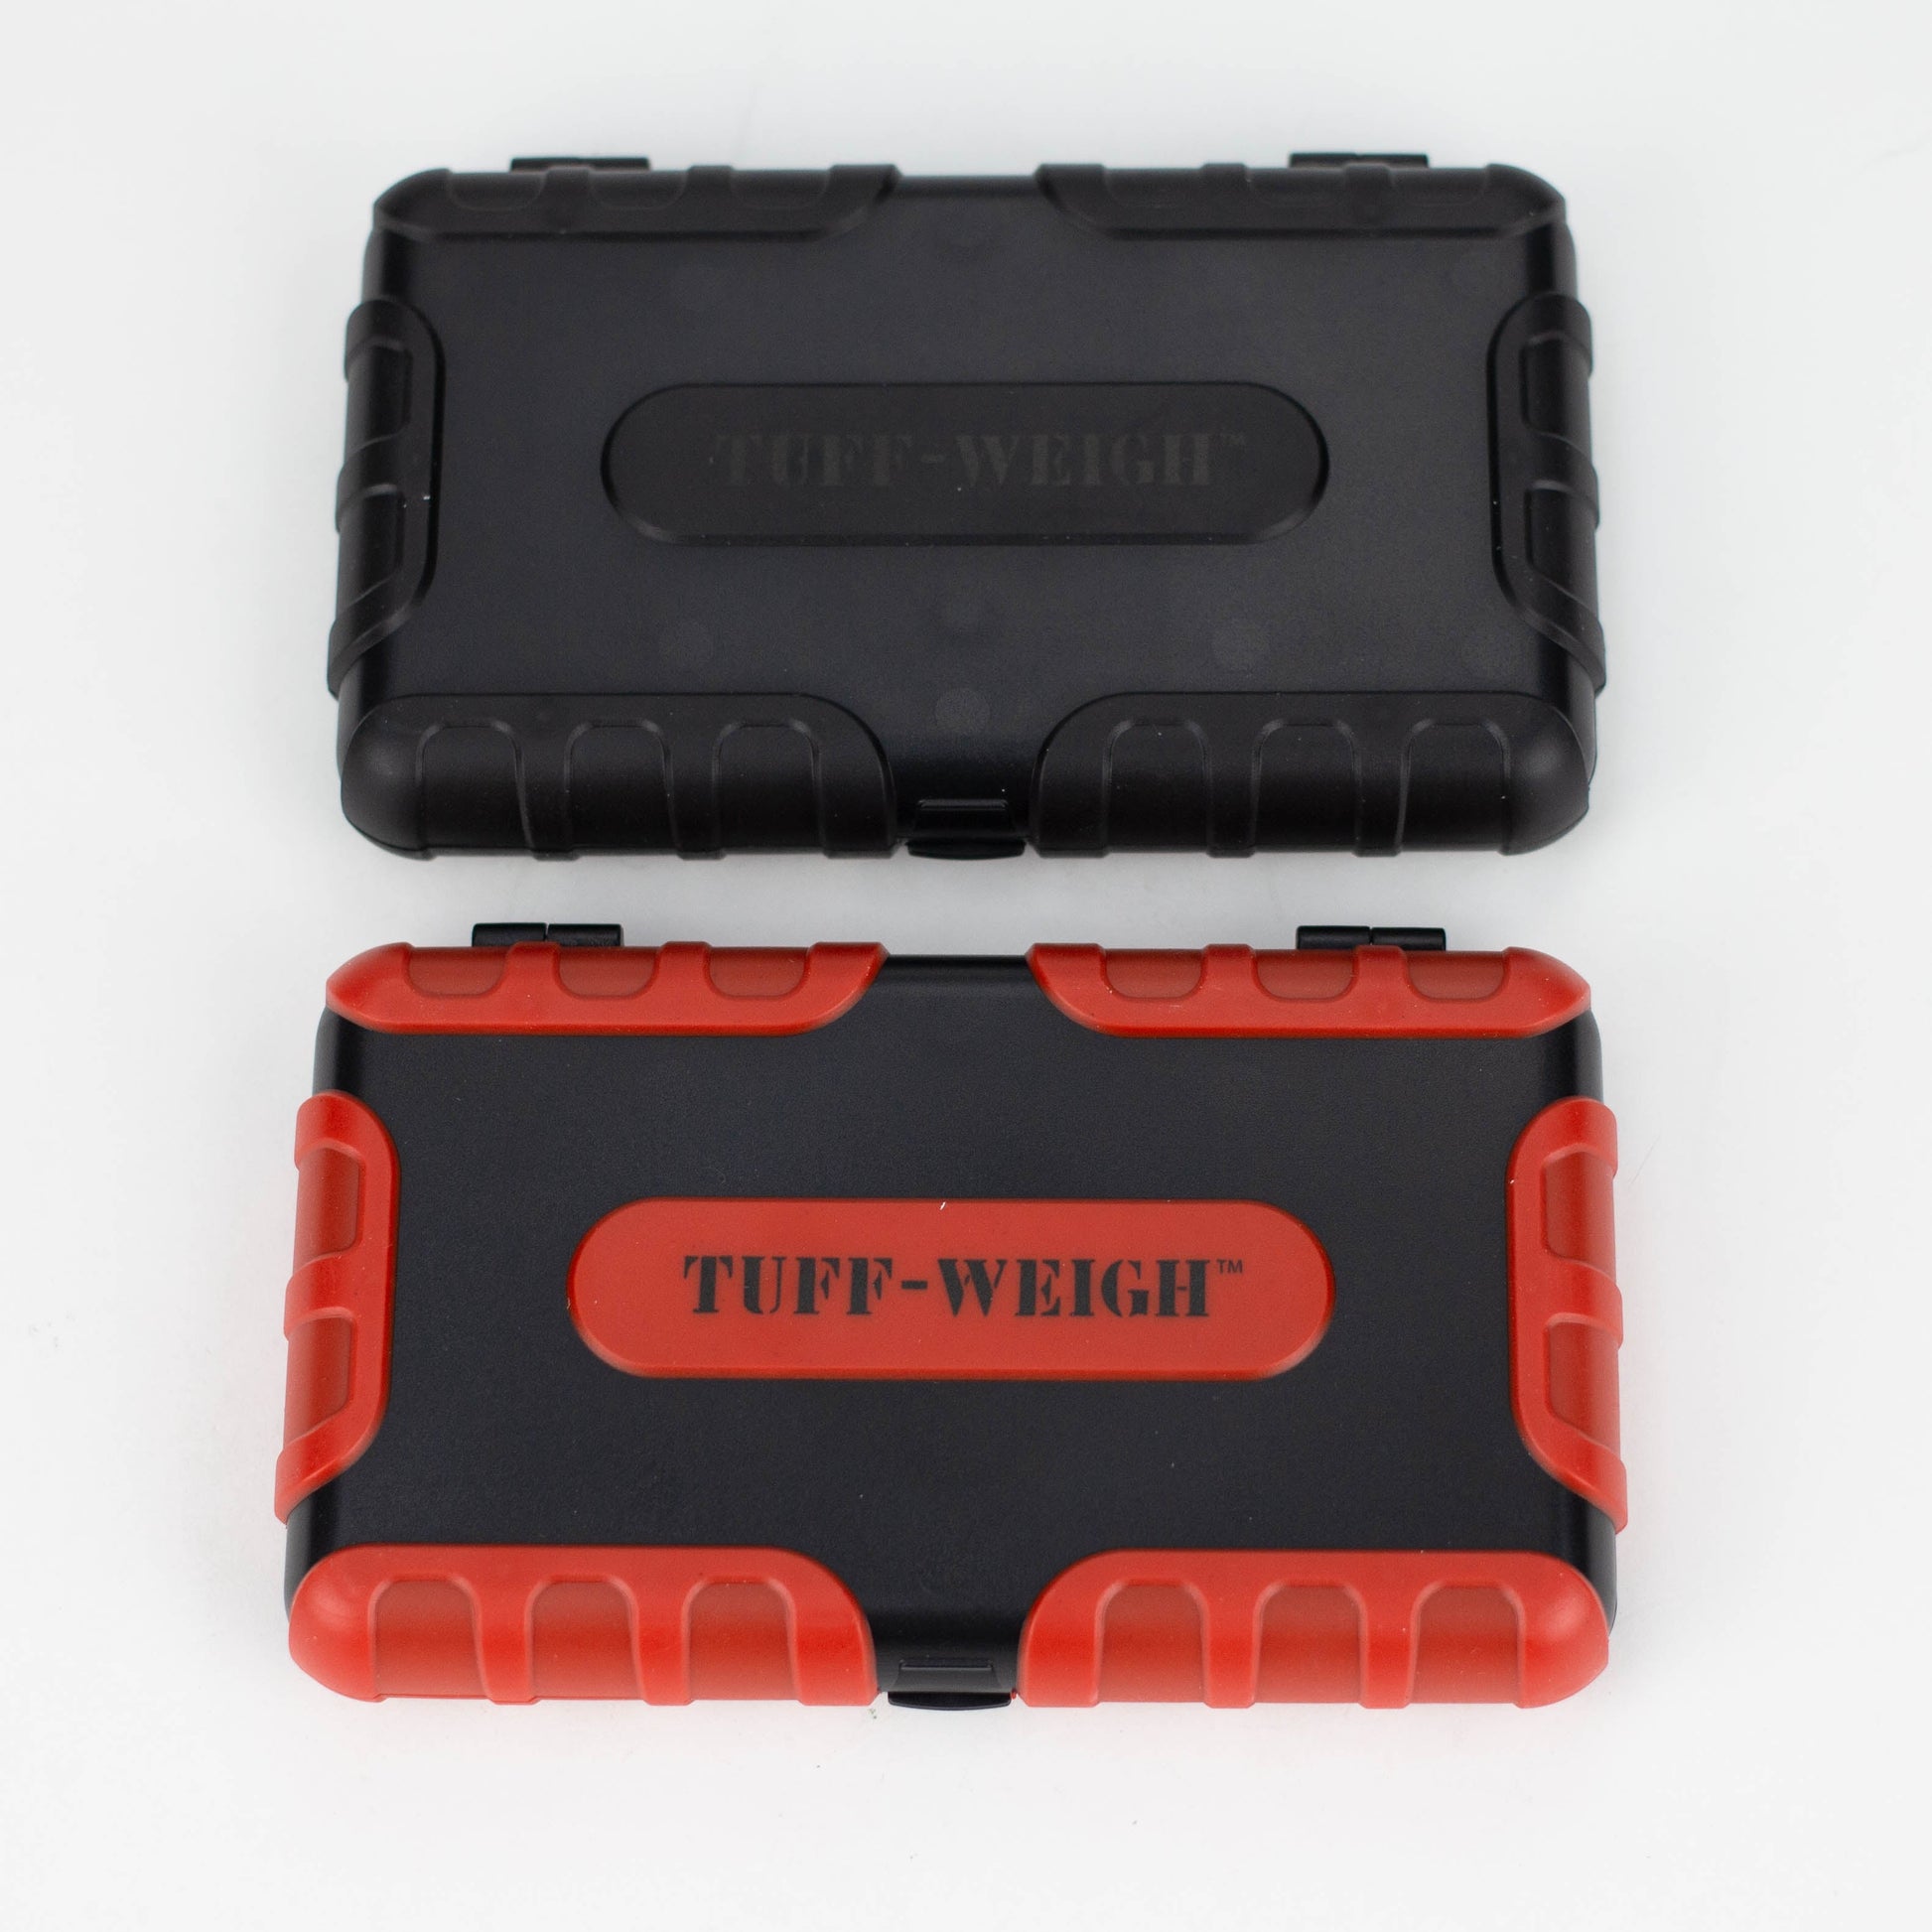 Truweigh | Tuff-Weigh Scale - 1000g x 0.1g_1